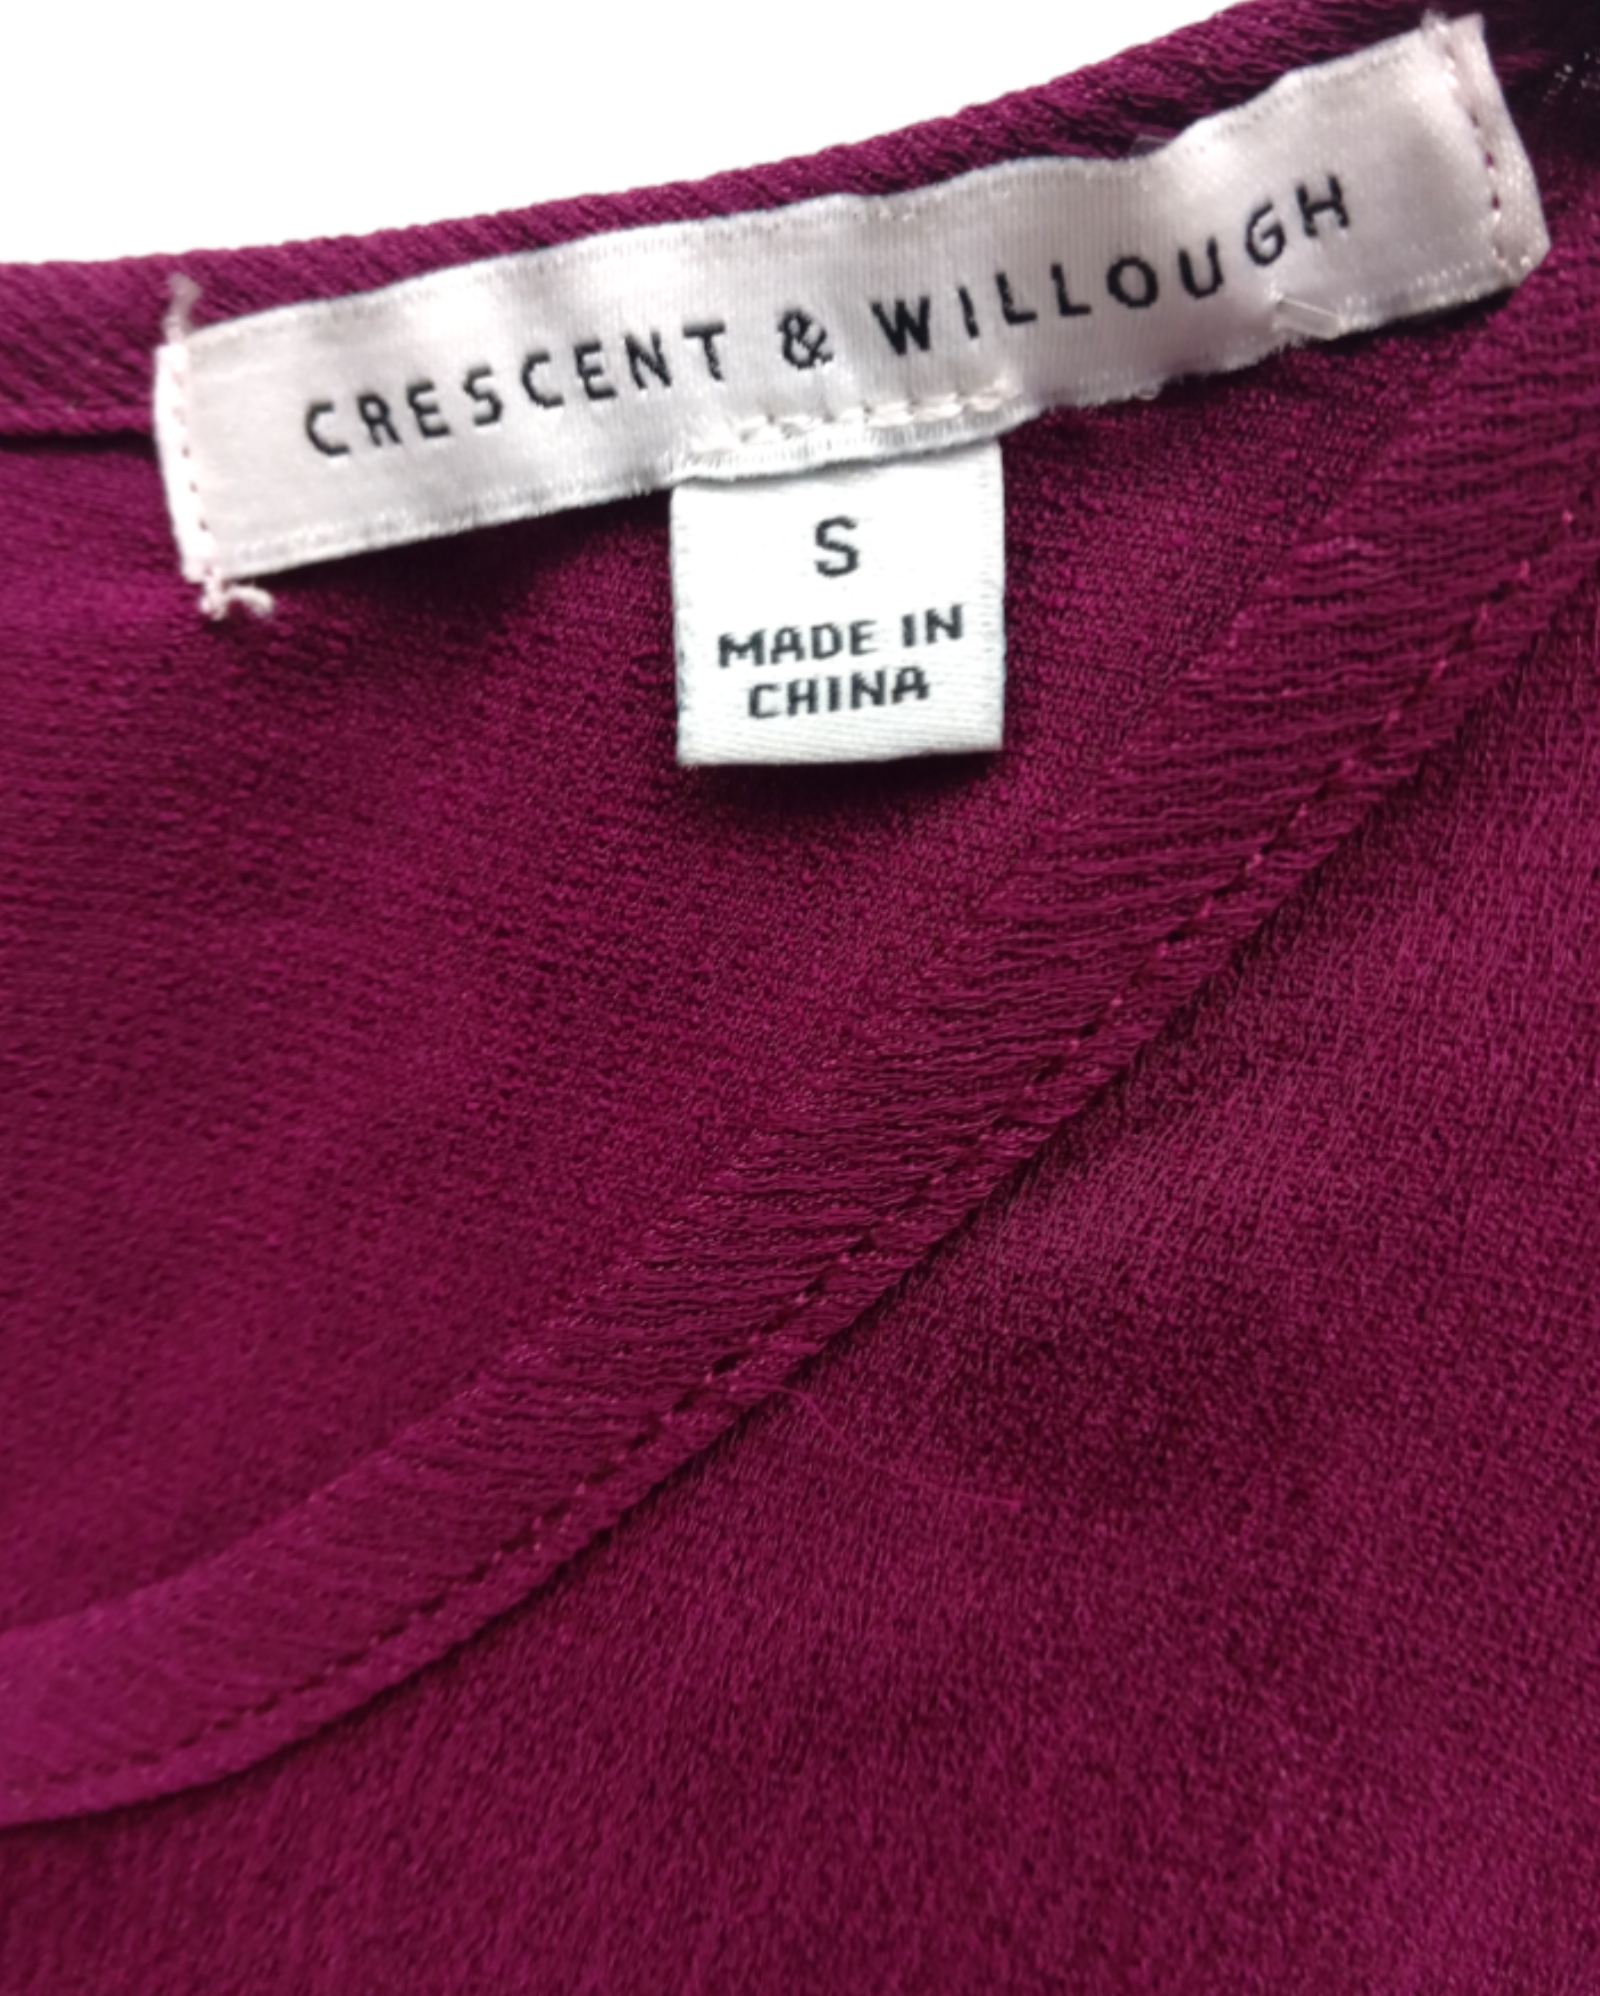 Blusas Casuales Crescent & willough